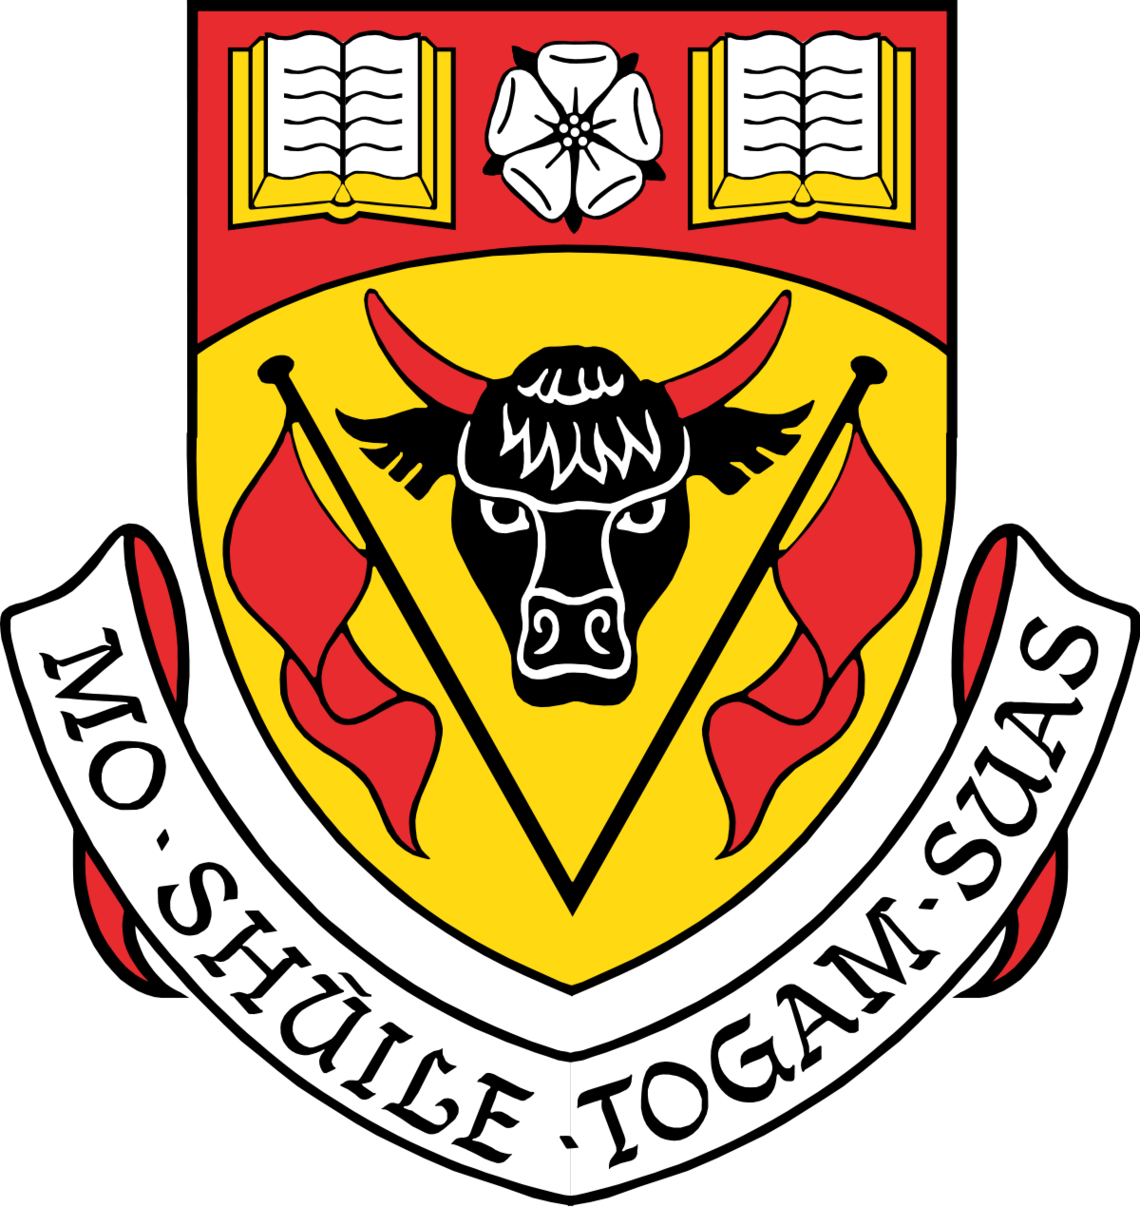 University of Calgary coat of arms